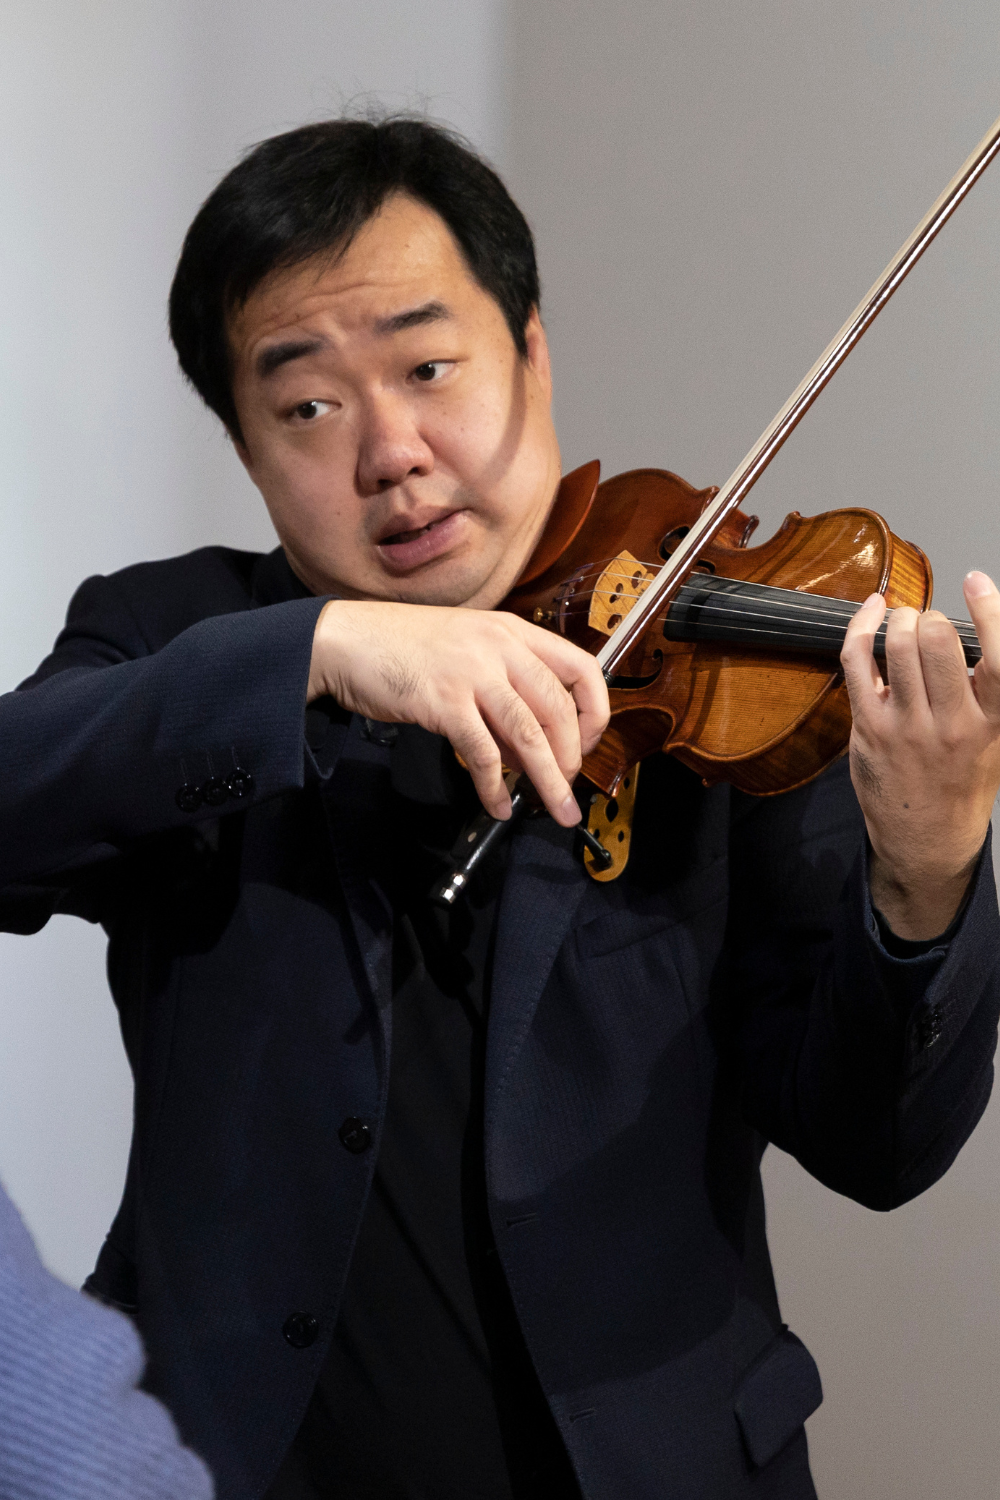 Ning Feng, violin masterclasses